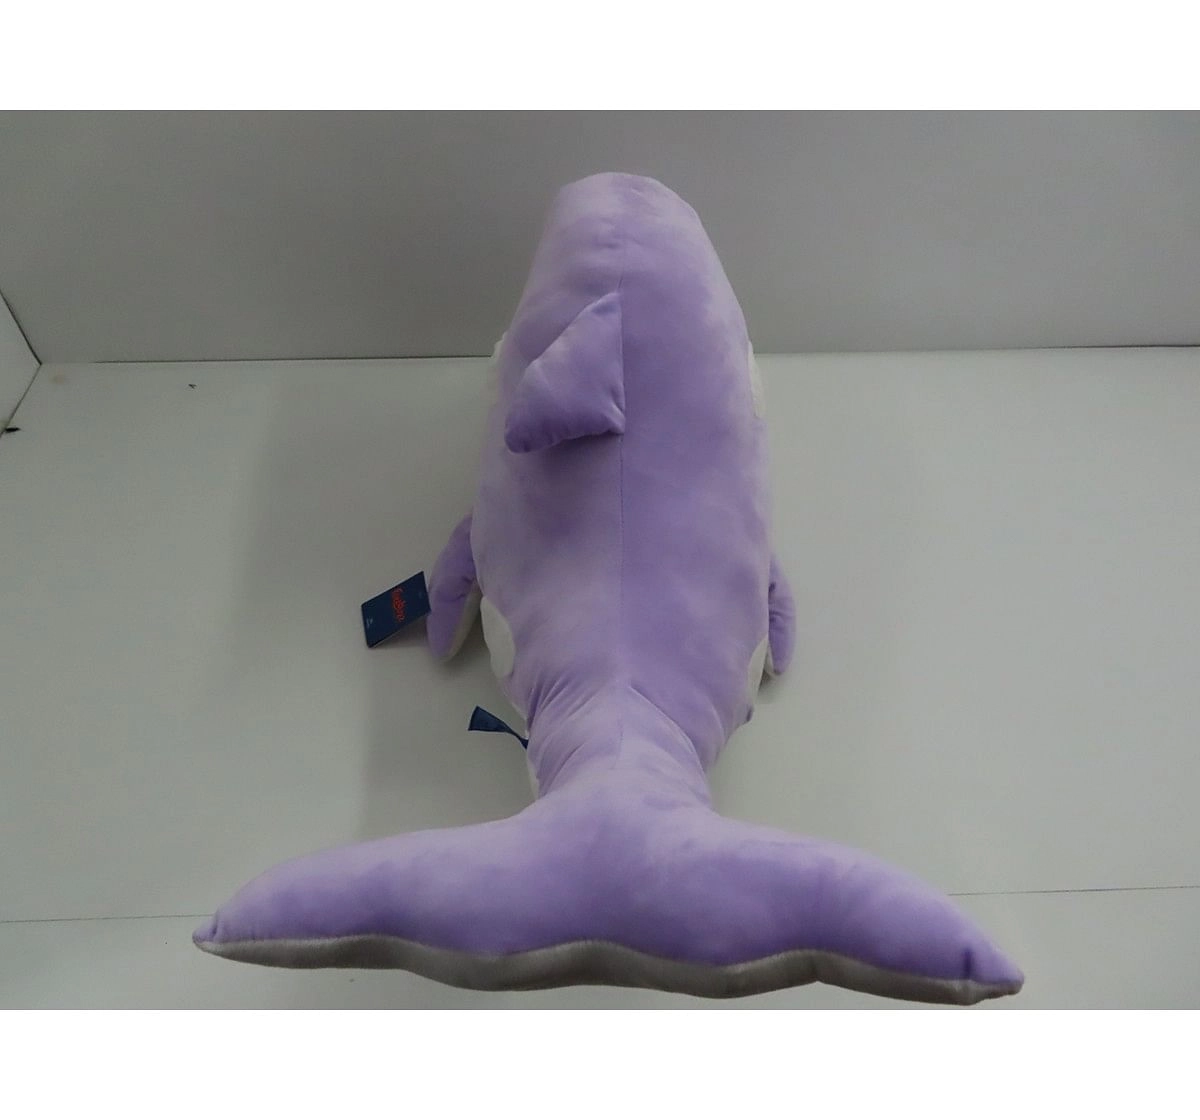 Fuzzbuzz Dolphin Plush - Purple - 100Cm Quirky Soft Toys for Kids age 12M+ - 33 Cm (Purple)